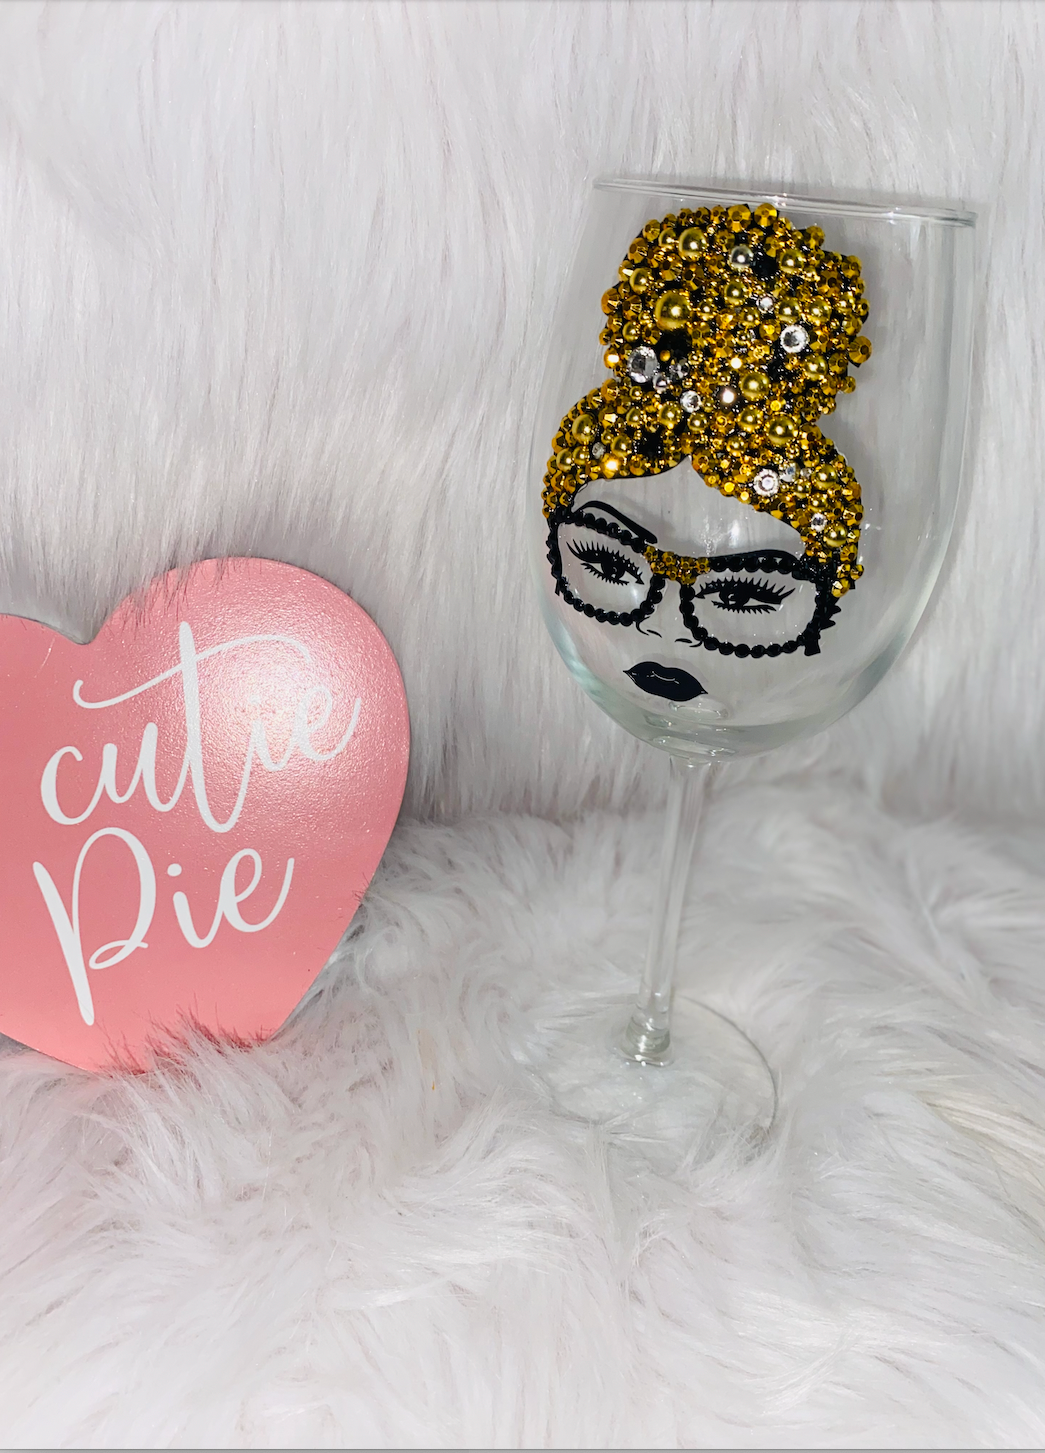 Getting Crafty: Glitter Wine Glasses – Diaries of a Domestic Diva